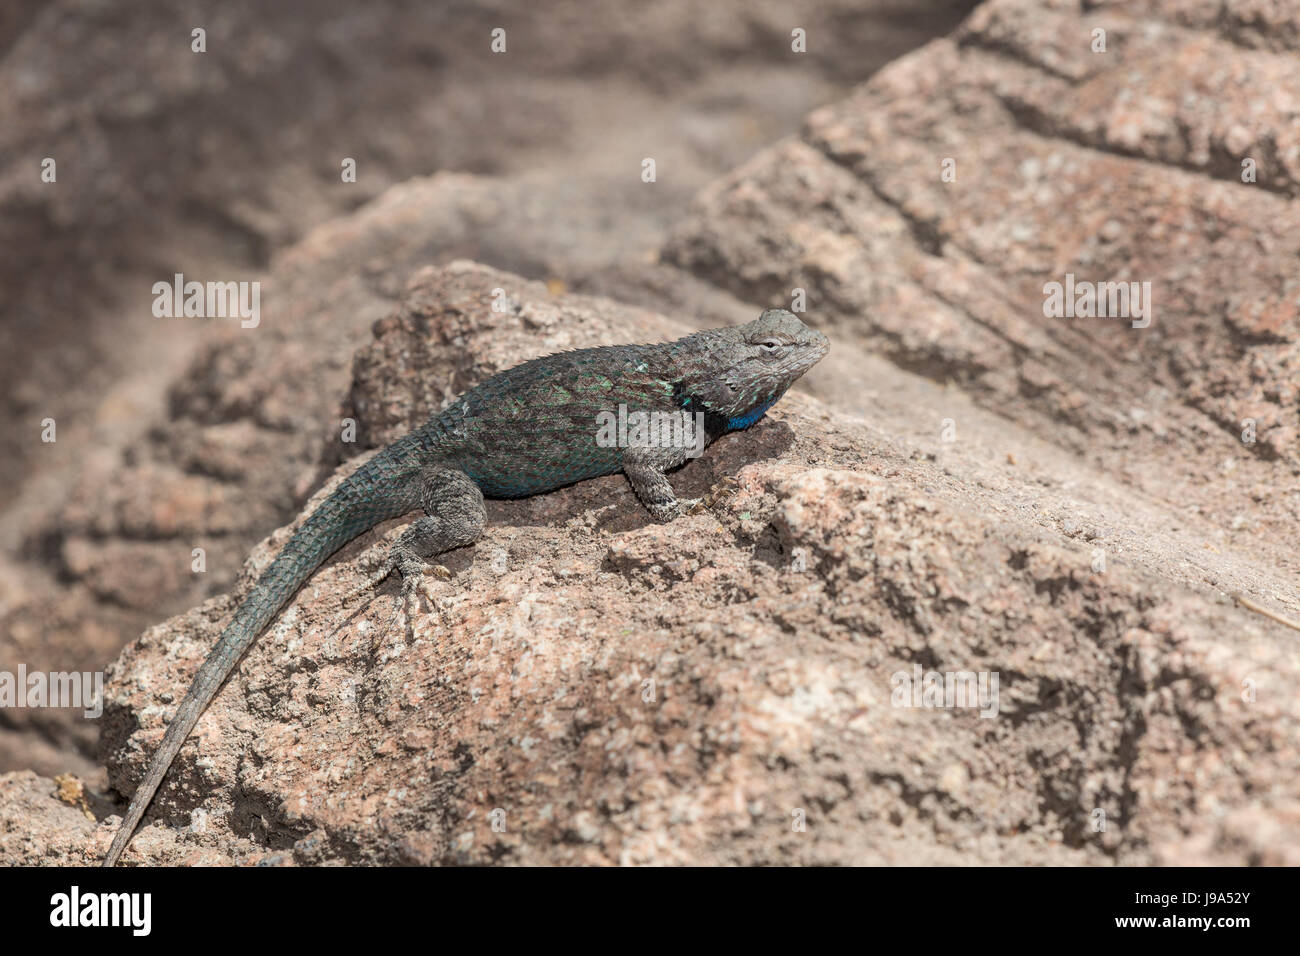 Clark's Spiny Lizard (Sceloporus clarkii) on a rock. Stock Photo